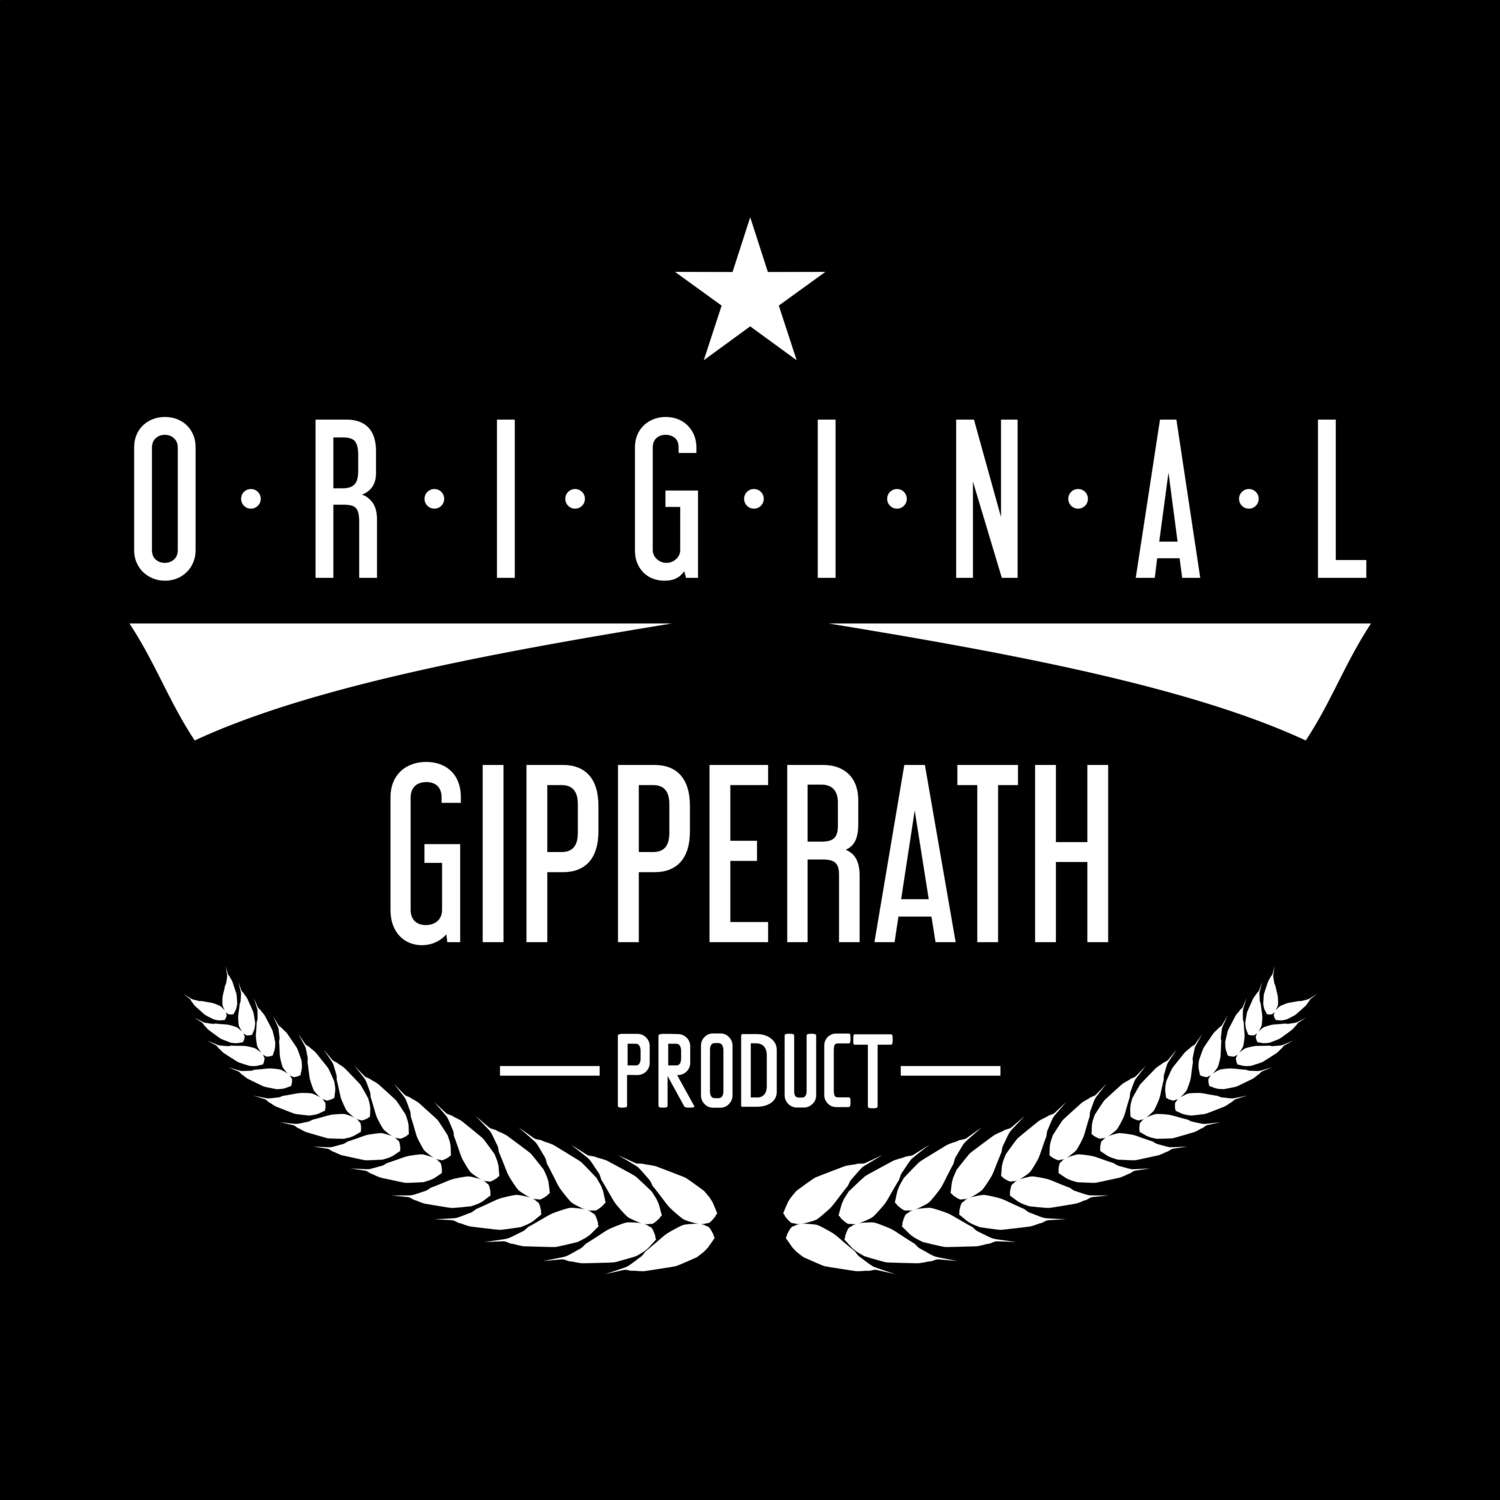 Gipperath T-Shirt »Original Product«